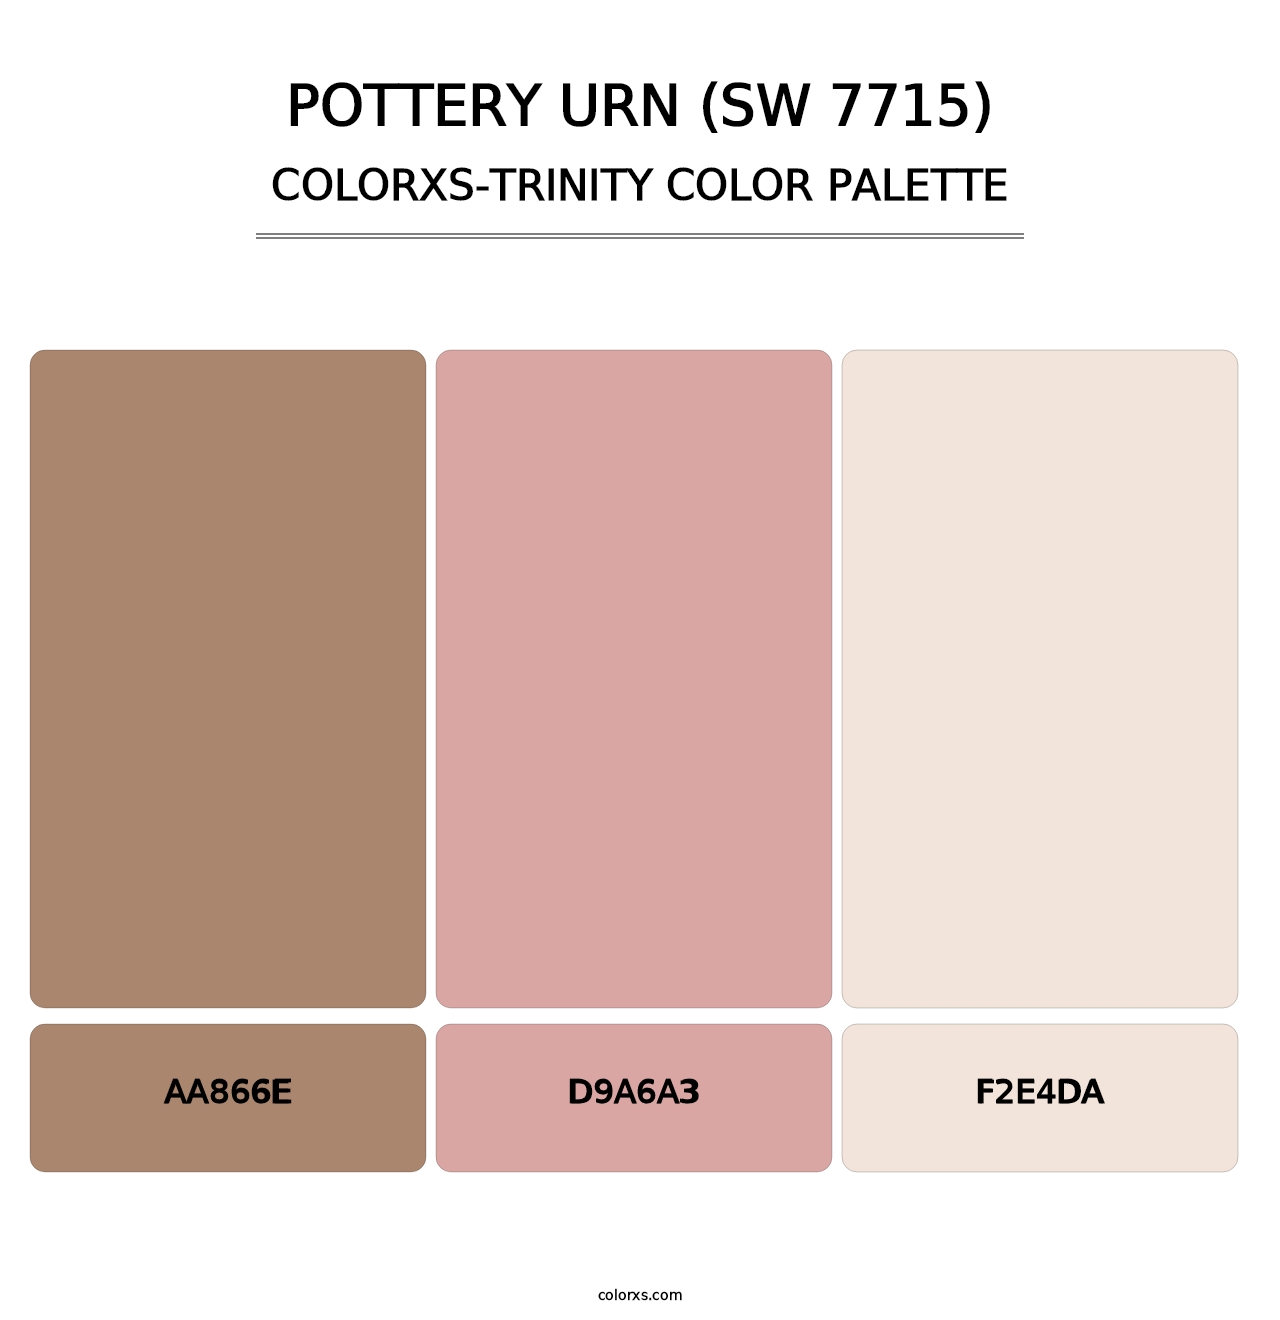 Pottery Urn (SW 7715) - Colorxs Trinity Palette